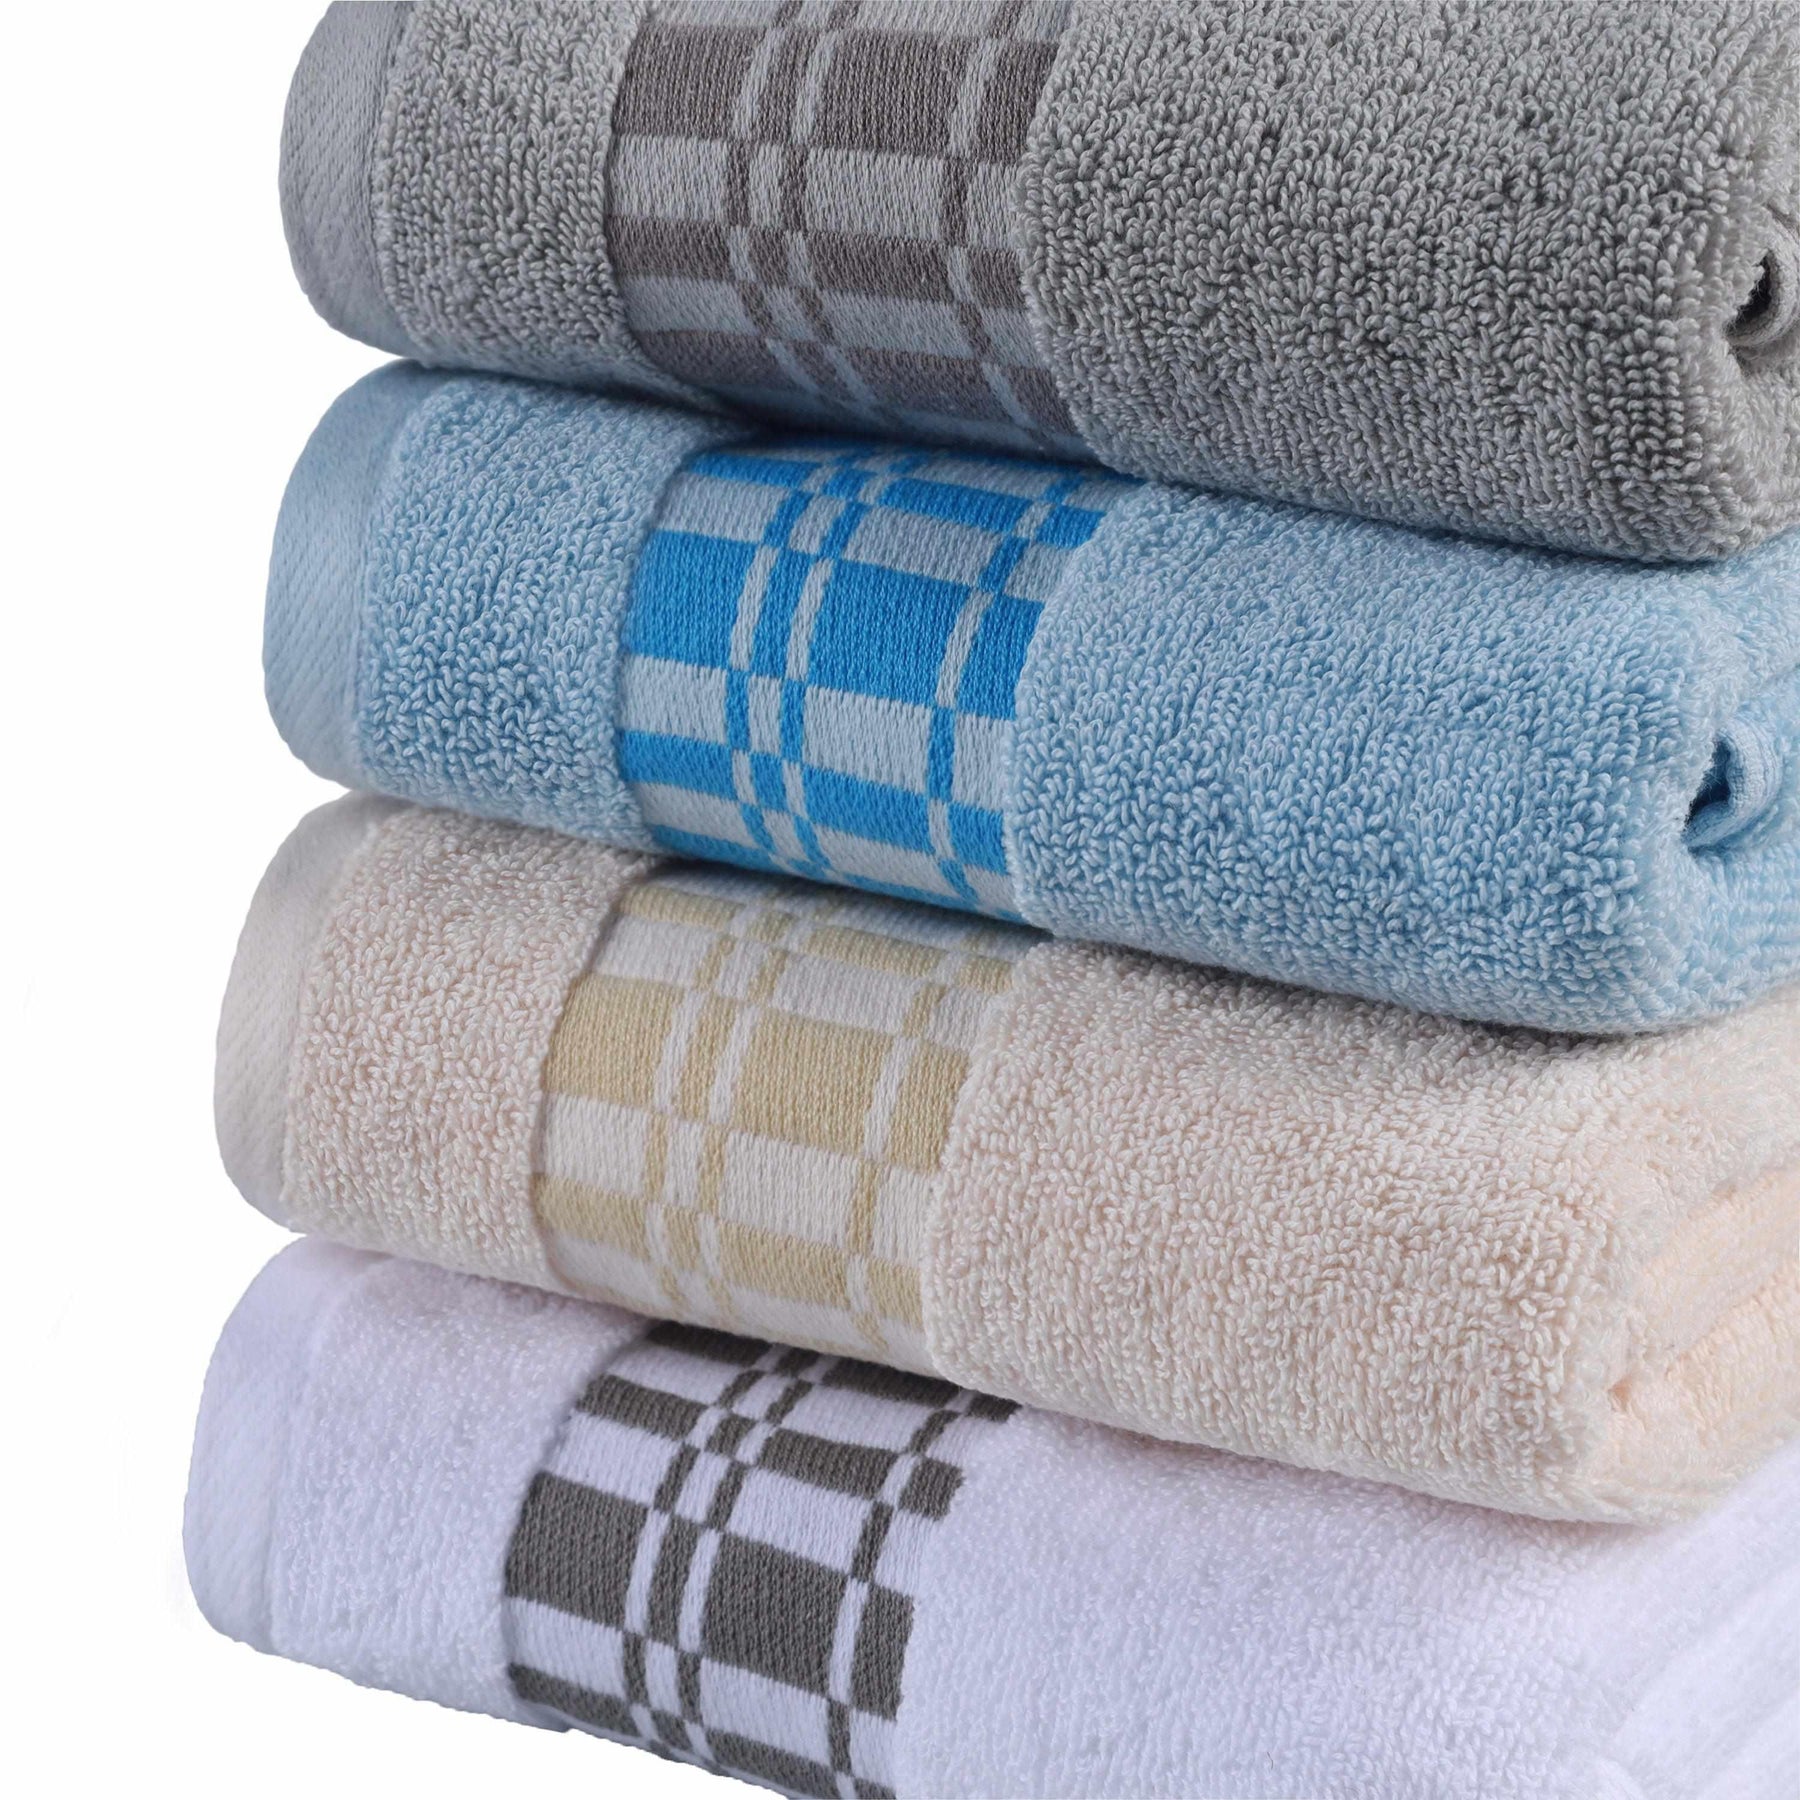  Superior Larissa Cotton 8-Piece Assorted Towel Set with Geometric Embroidered Jacquard Border - Grey